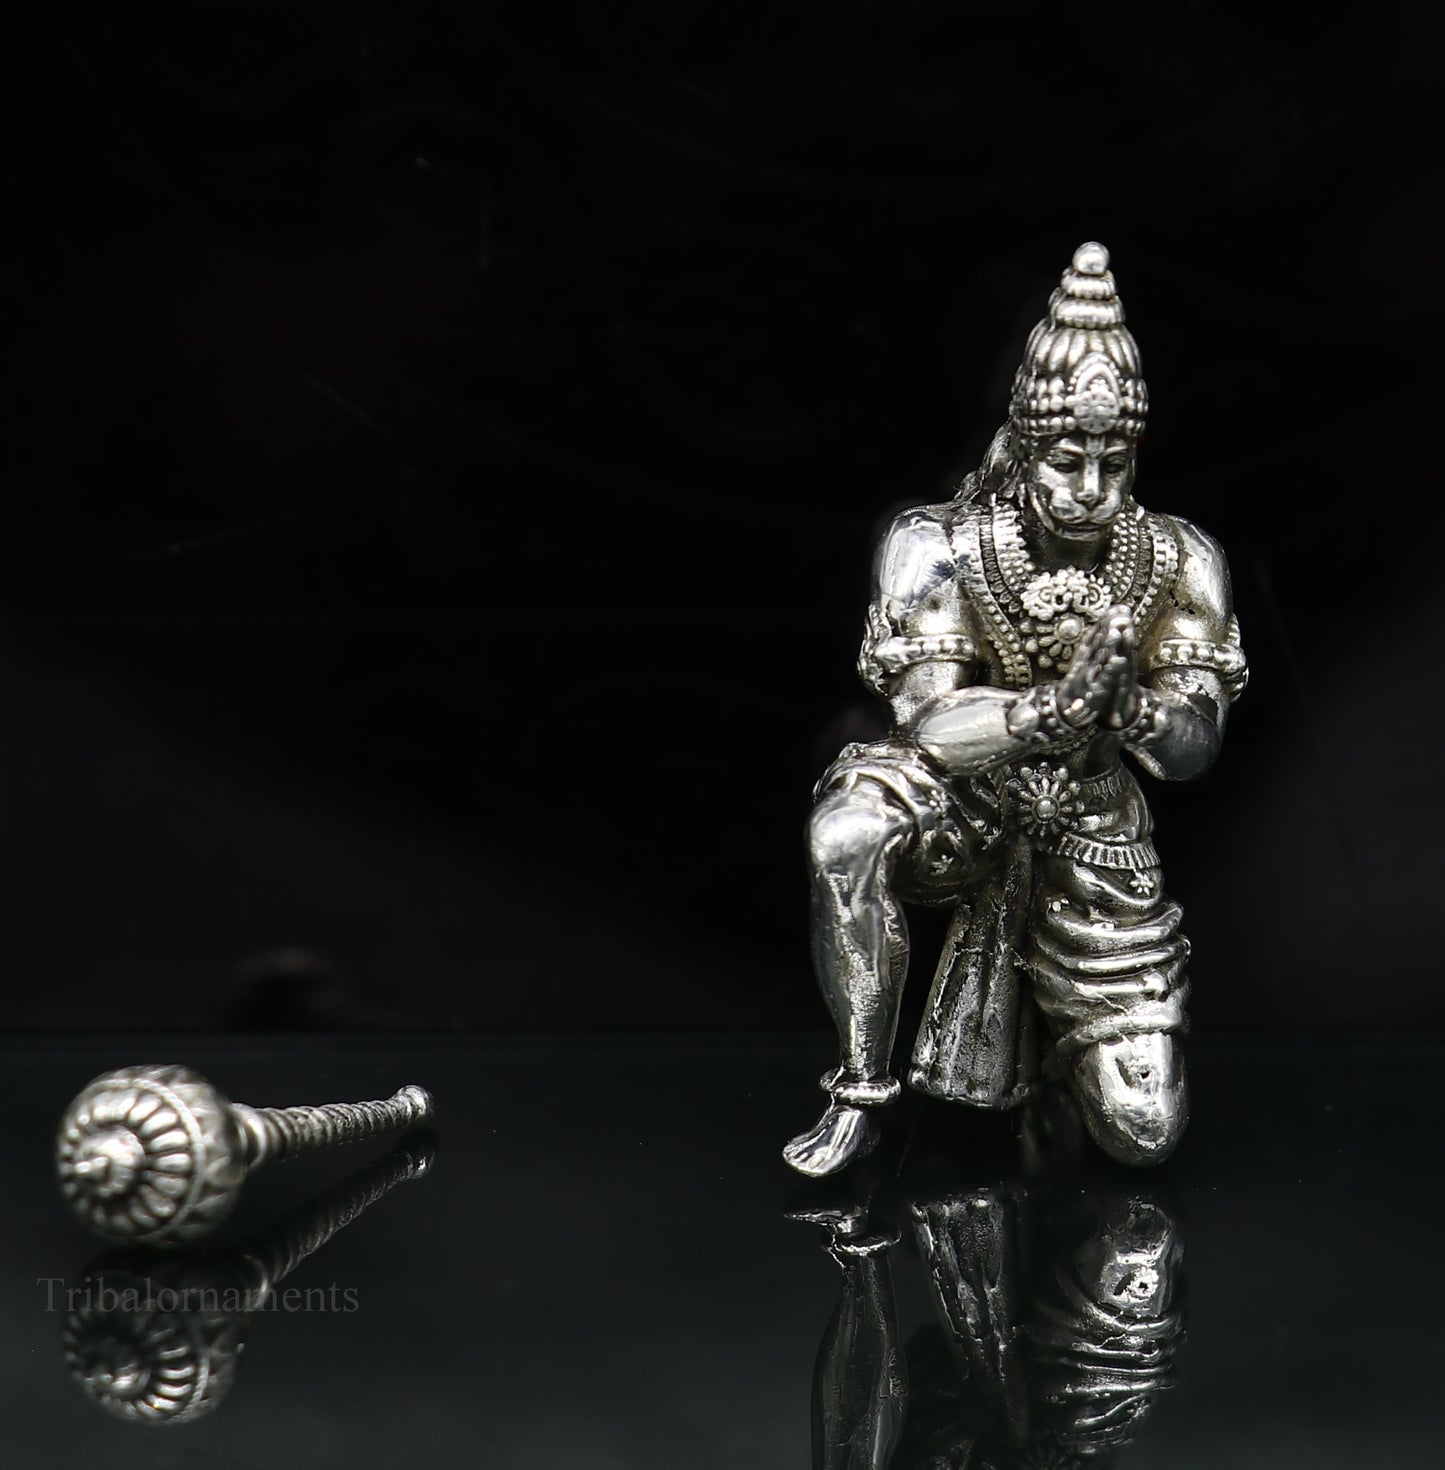 925 silver handmade Lord hanuman 1.5" statue, best puja or gifting god hanuman statue sculpture home temple puja art, utensils art124 - TRIBAL ORNAMENTS